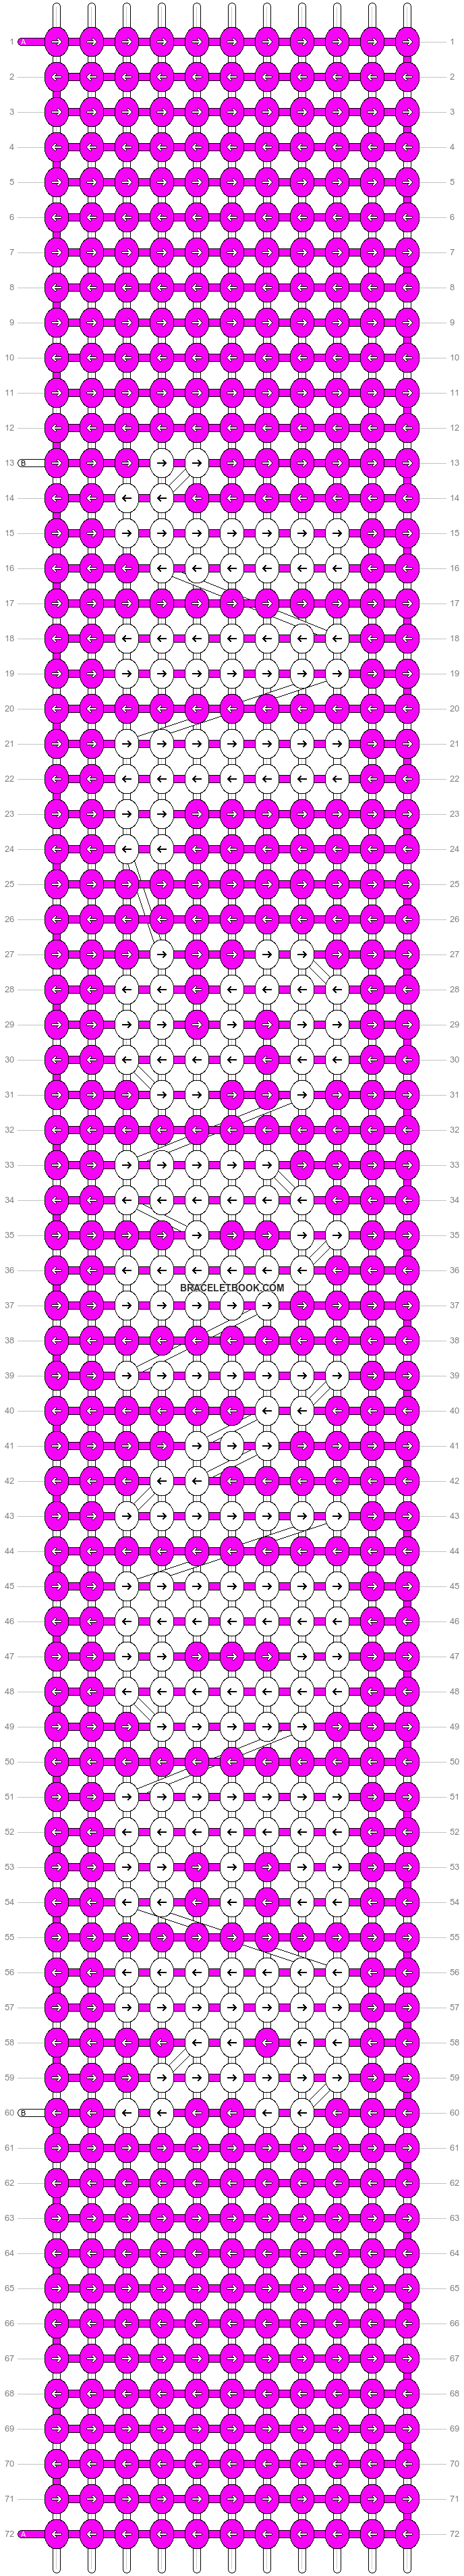 Alpha pattern #60467 variation #107881 pattern